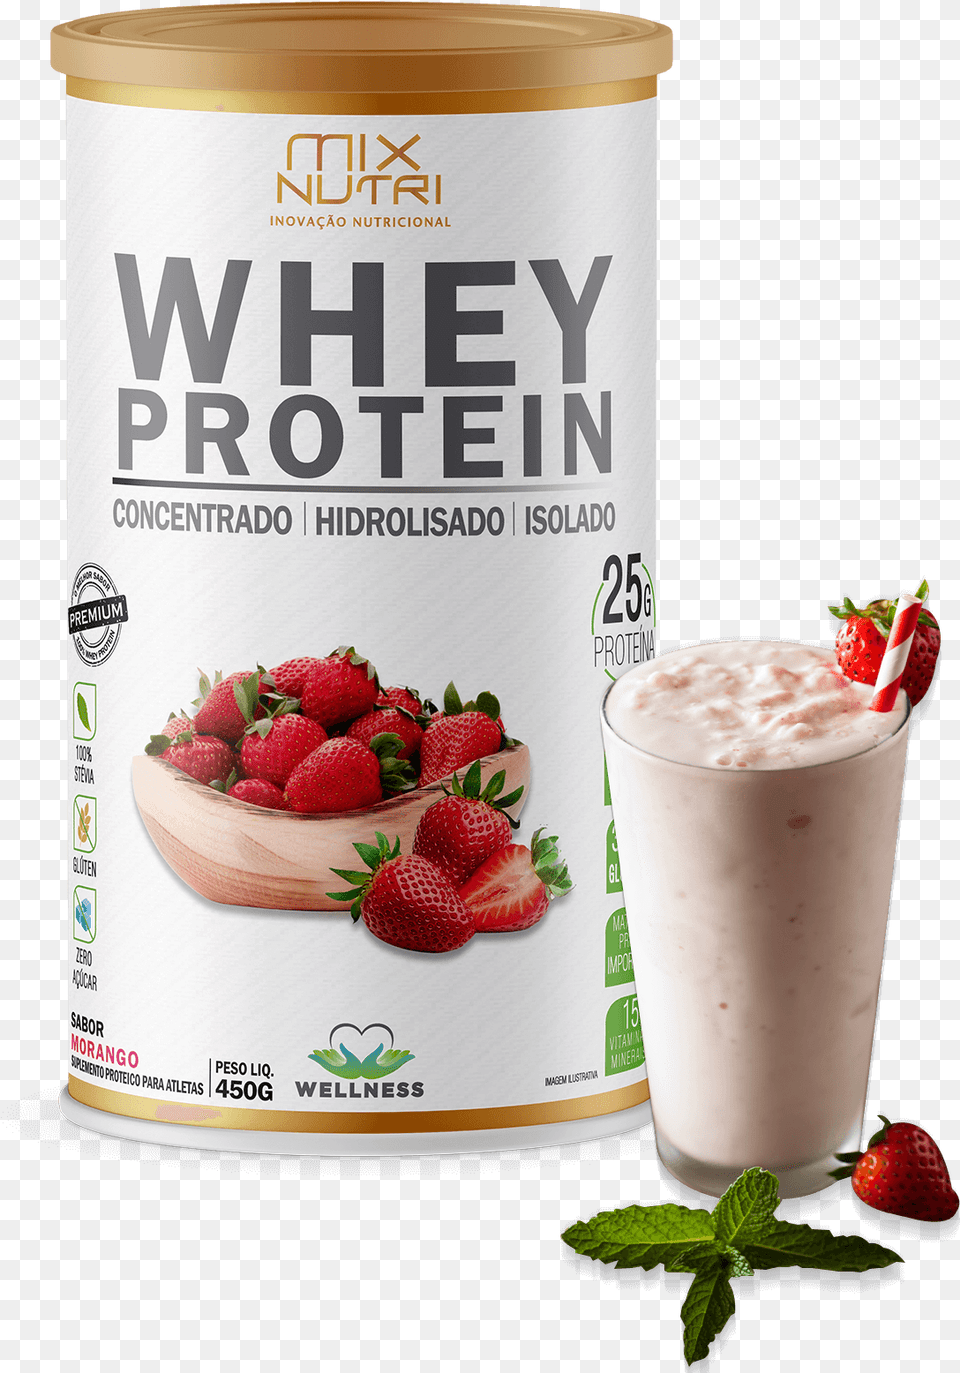 Whey Protein Morango Vegan Protein Mix Nutri, Yogurt, Juice, Food, Dessert Png Image